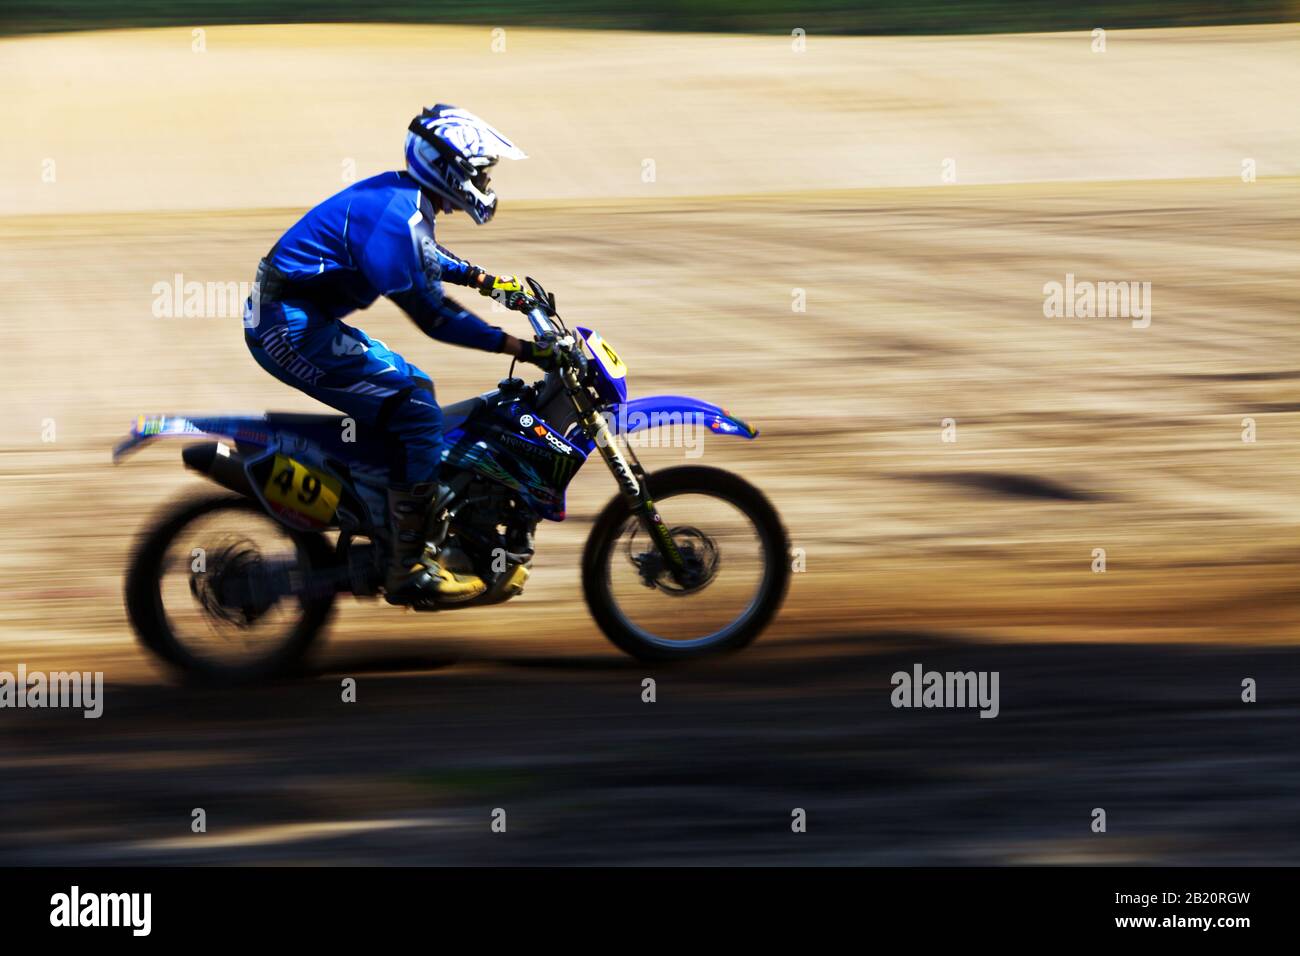 A motocross biker at speed Stock Photo